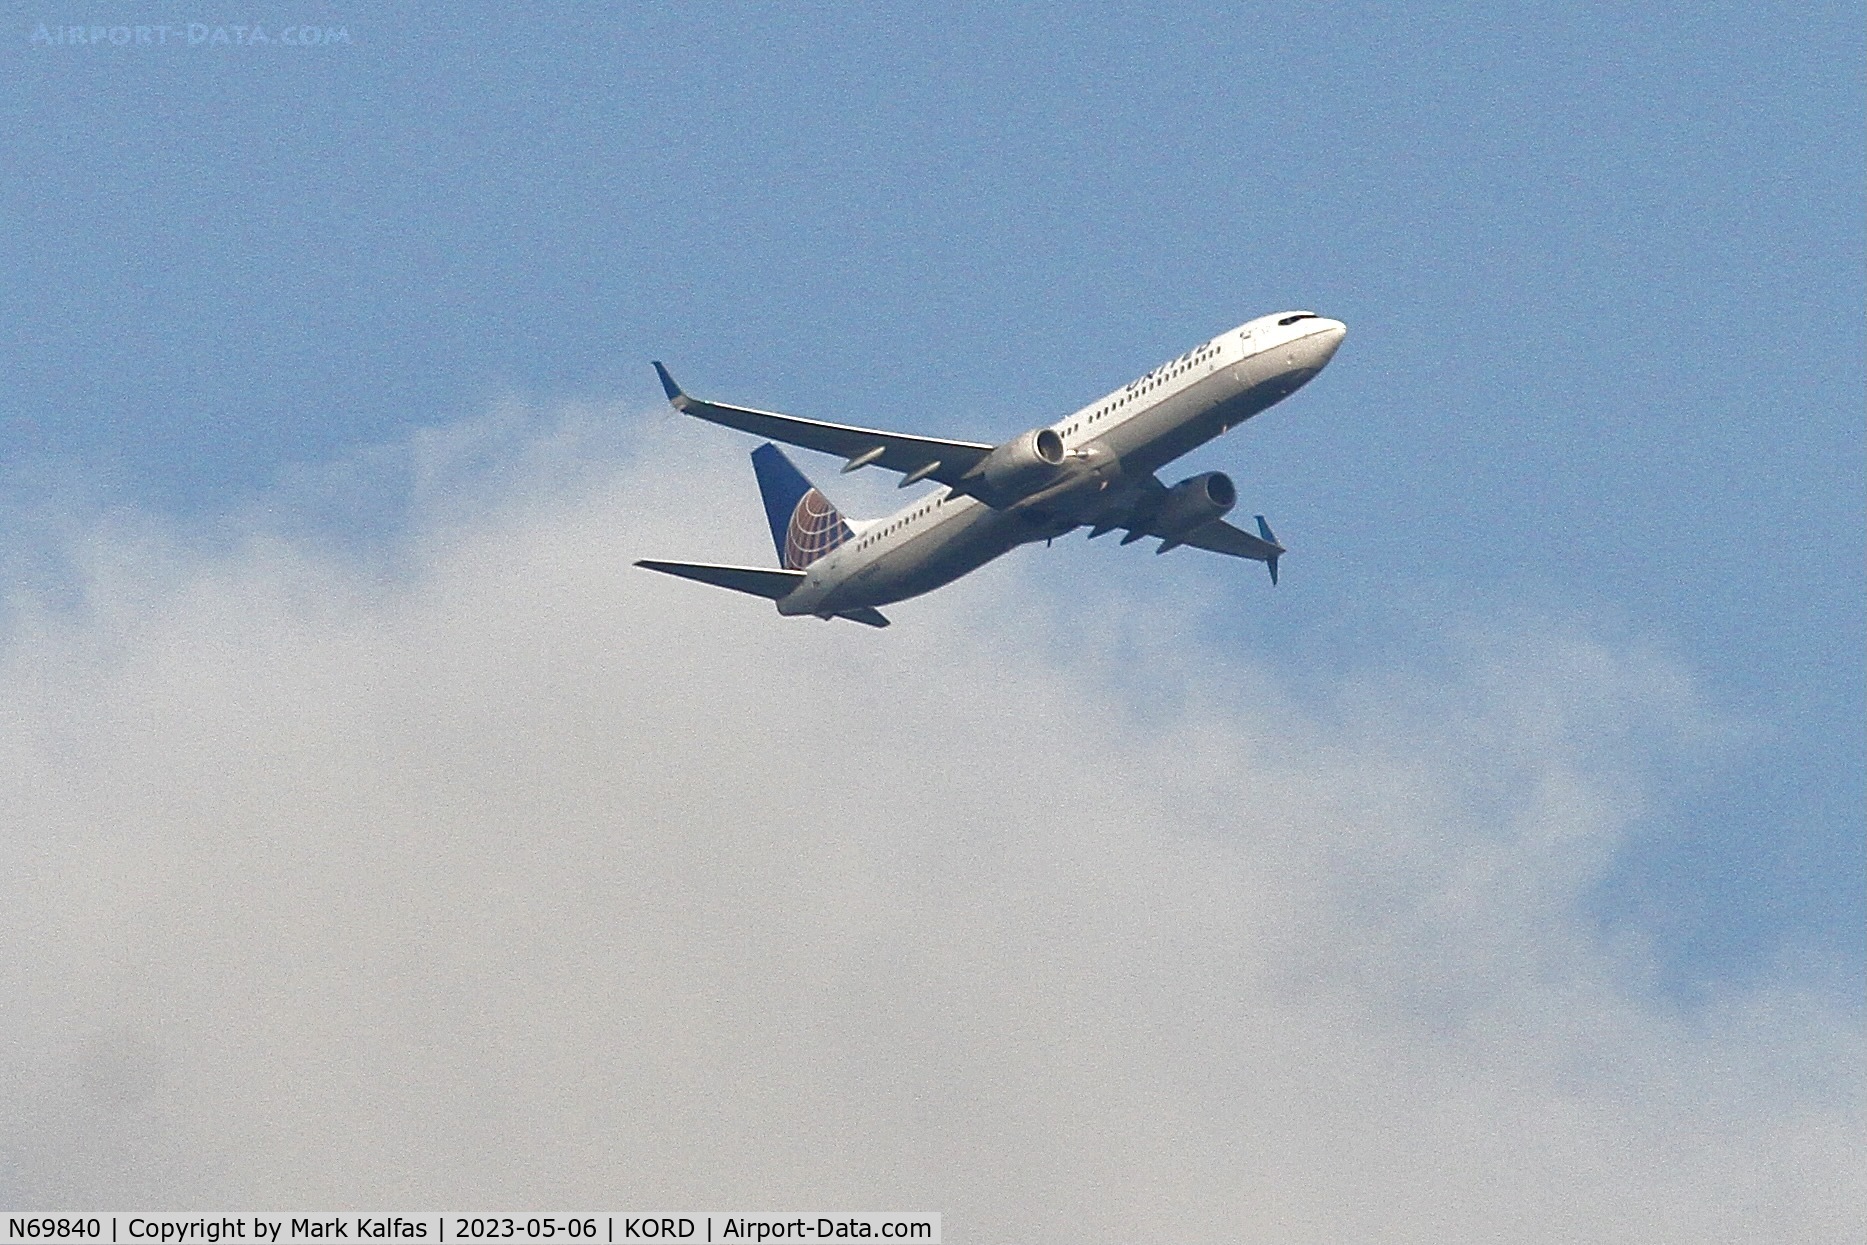 N69840, 2015 Boeing 737-924/ER C/N 42181, United Airlines Boeing 737-924/ER, N69840, UA1046 arriving at ORD from ATL.